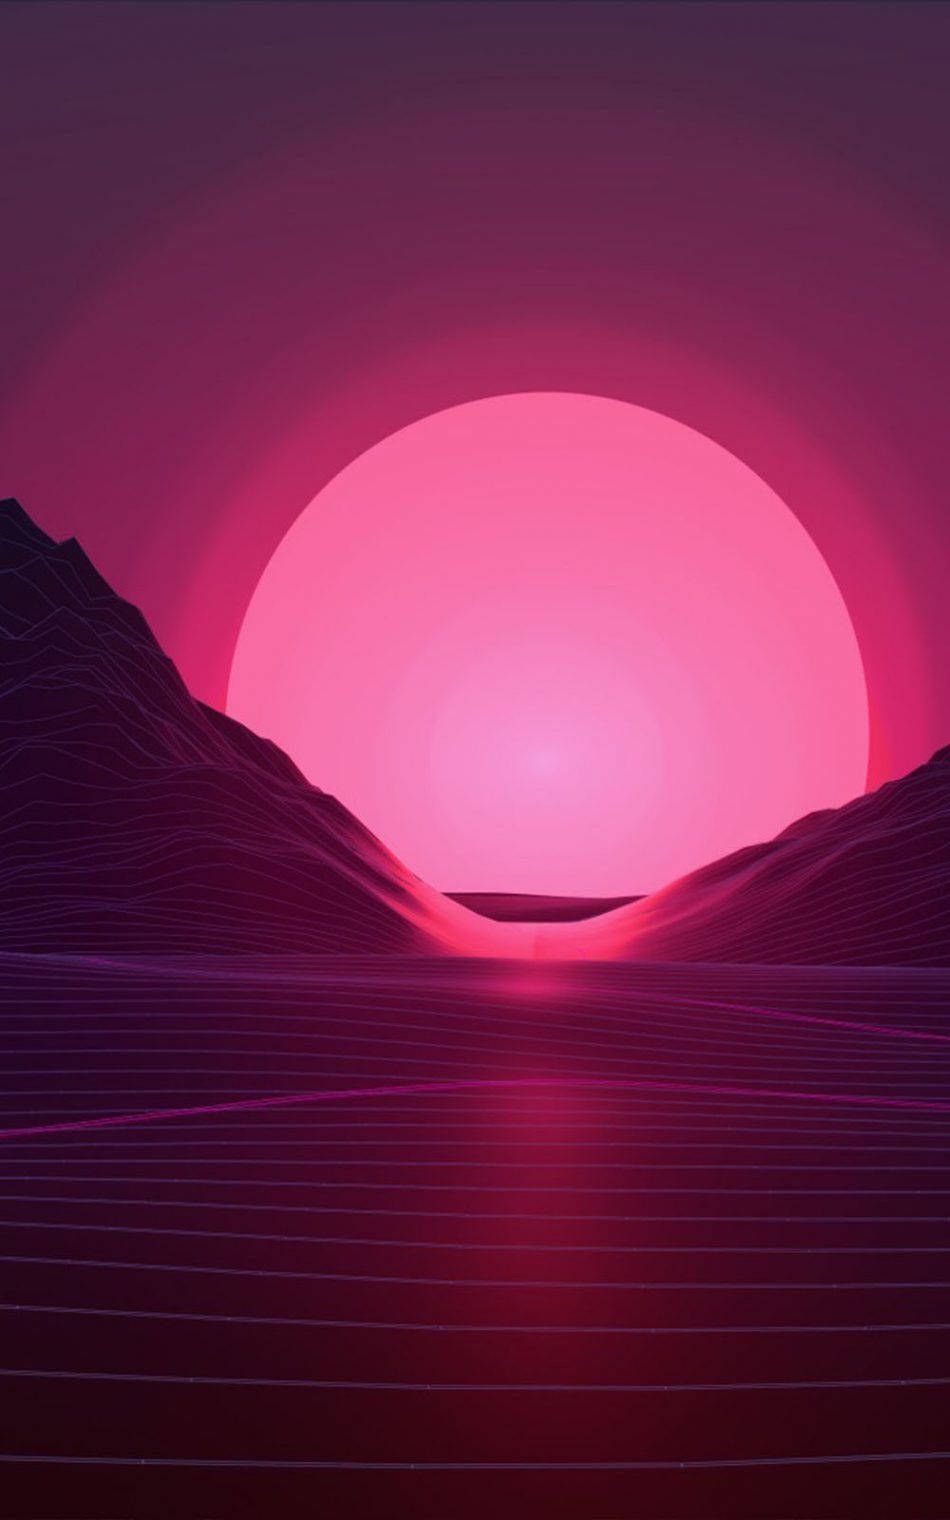 A pink sun setting over a pink mountain range - Vaporwave